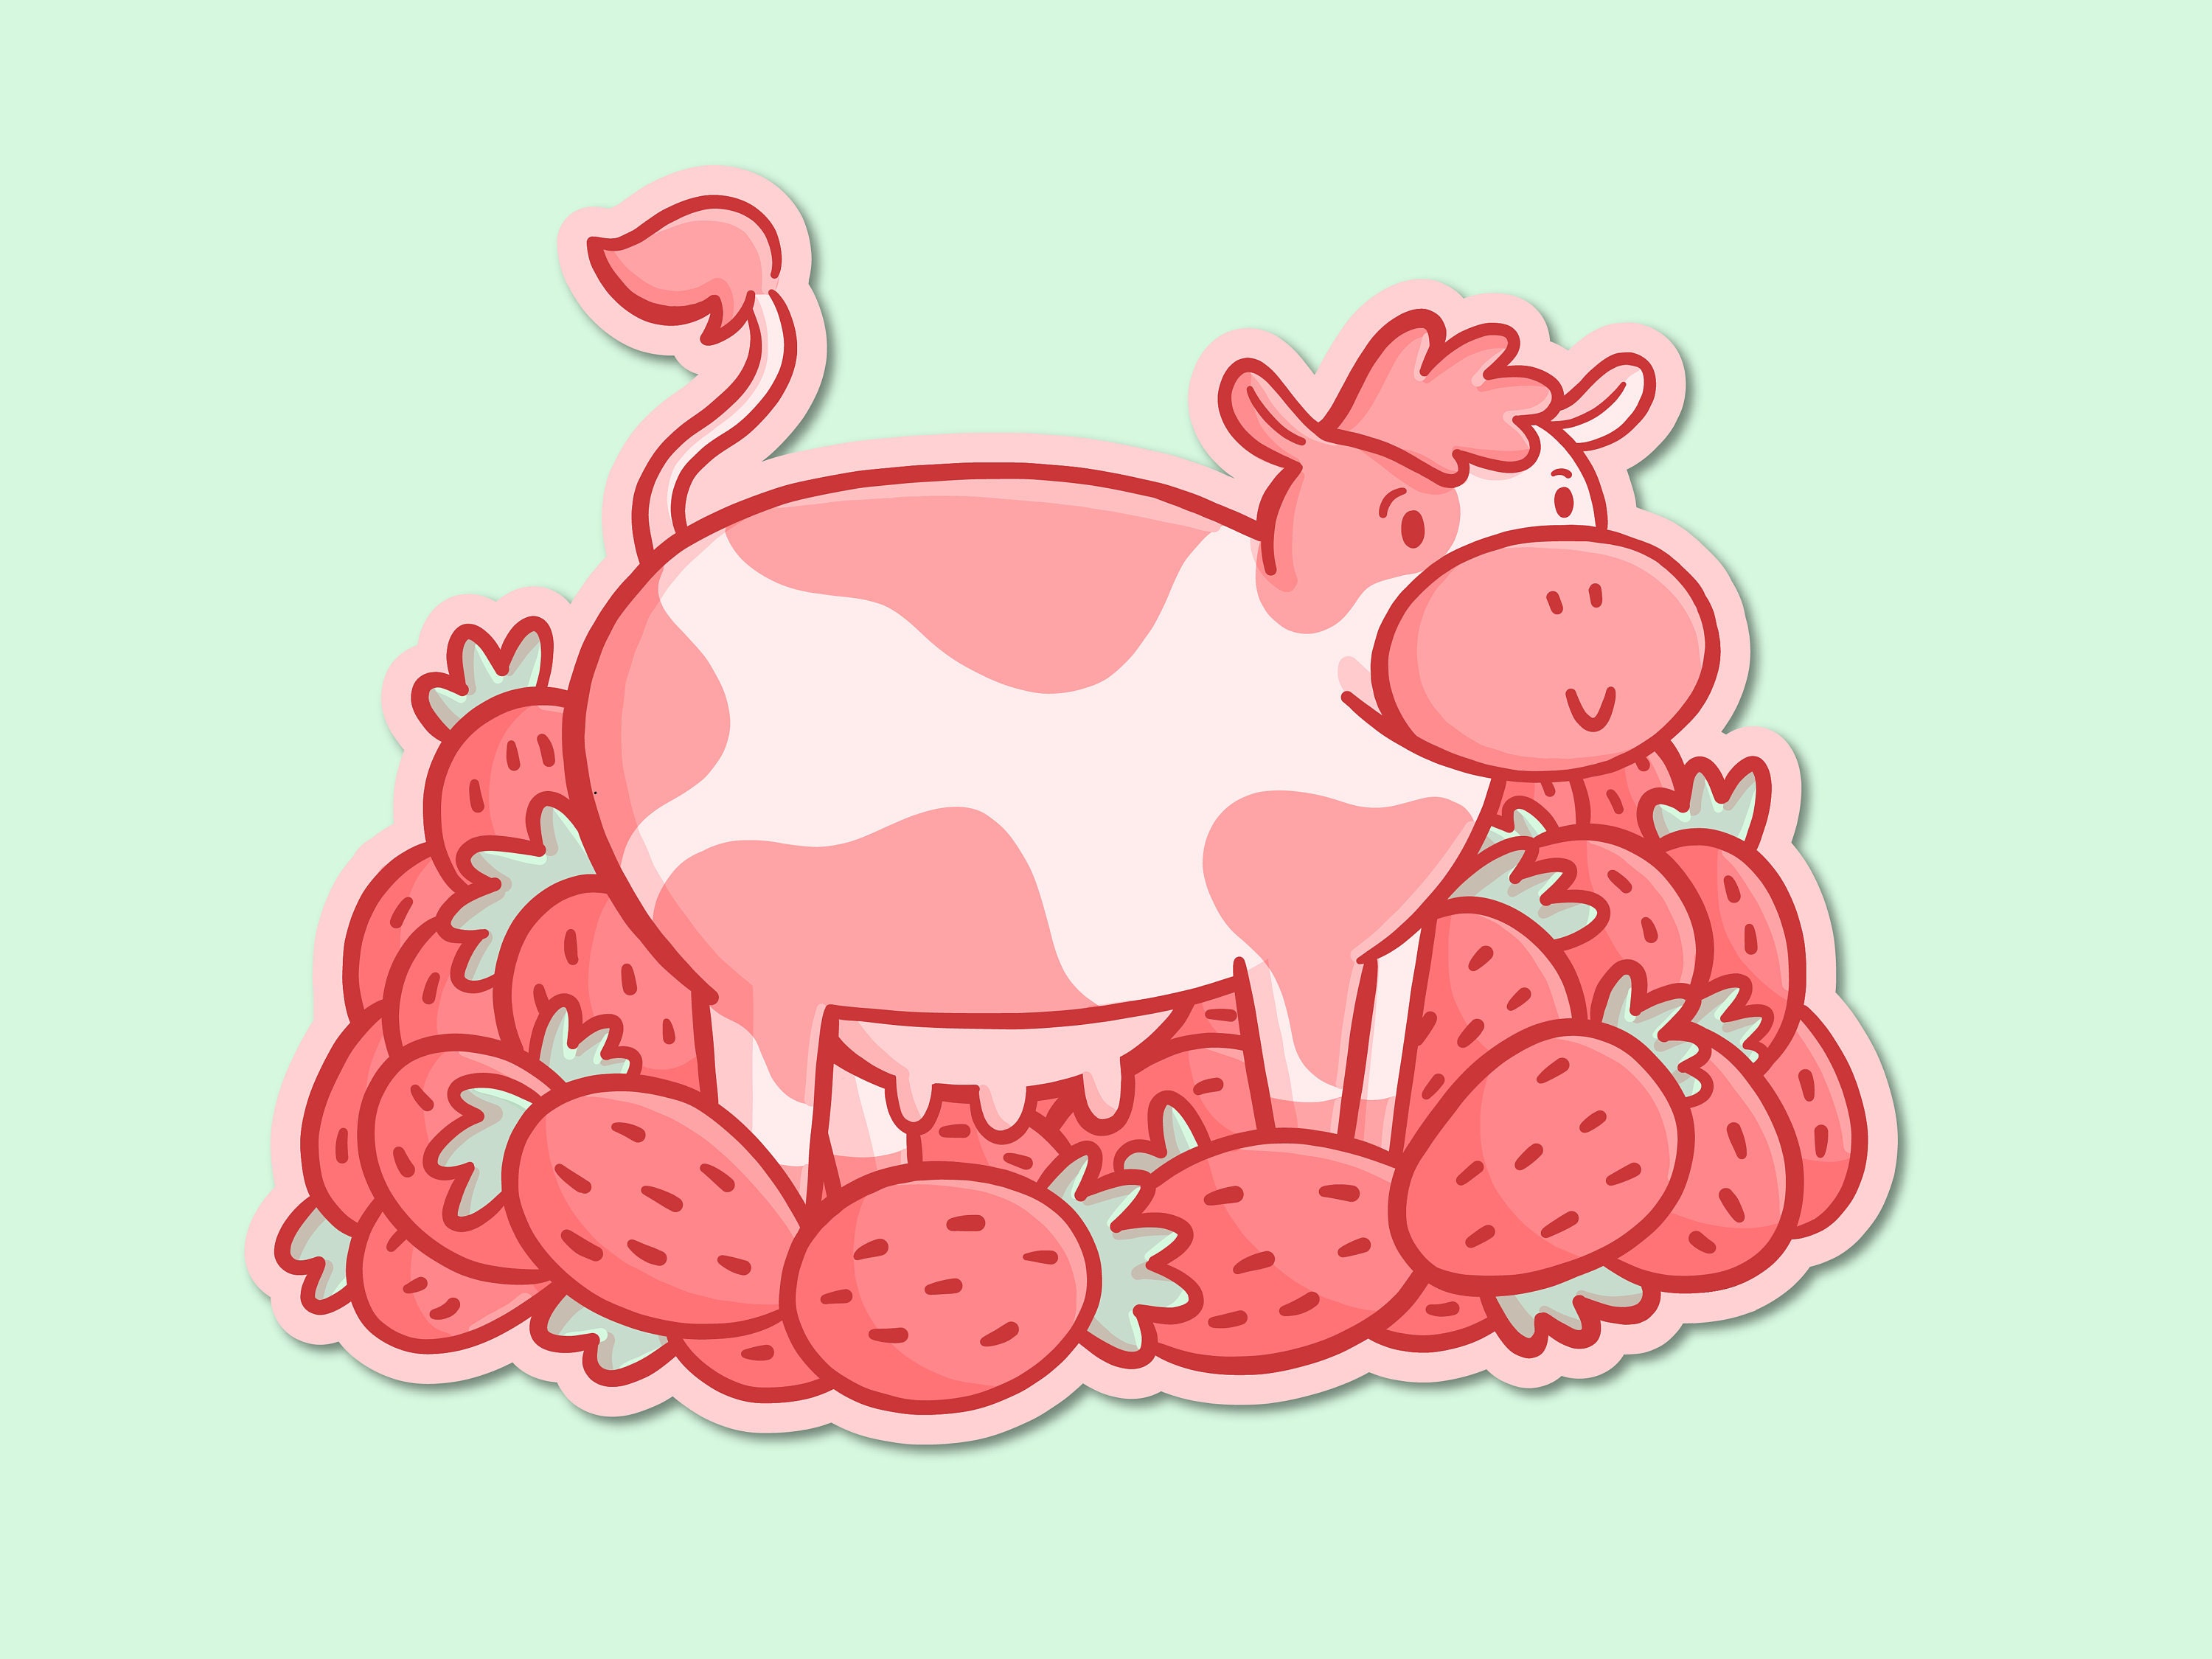 Strawberry Cow kawaii | Greeting Card